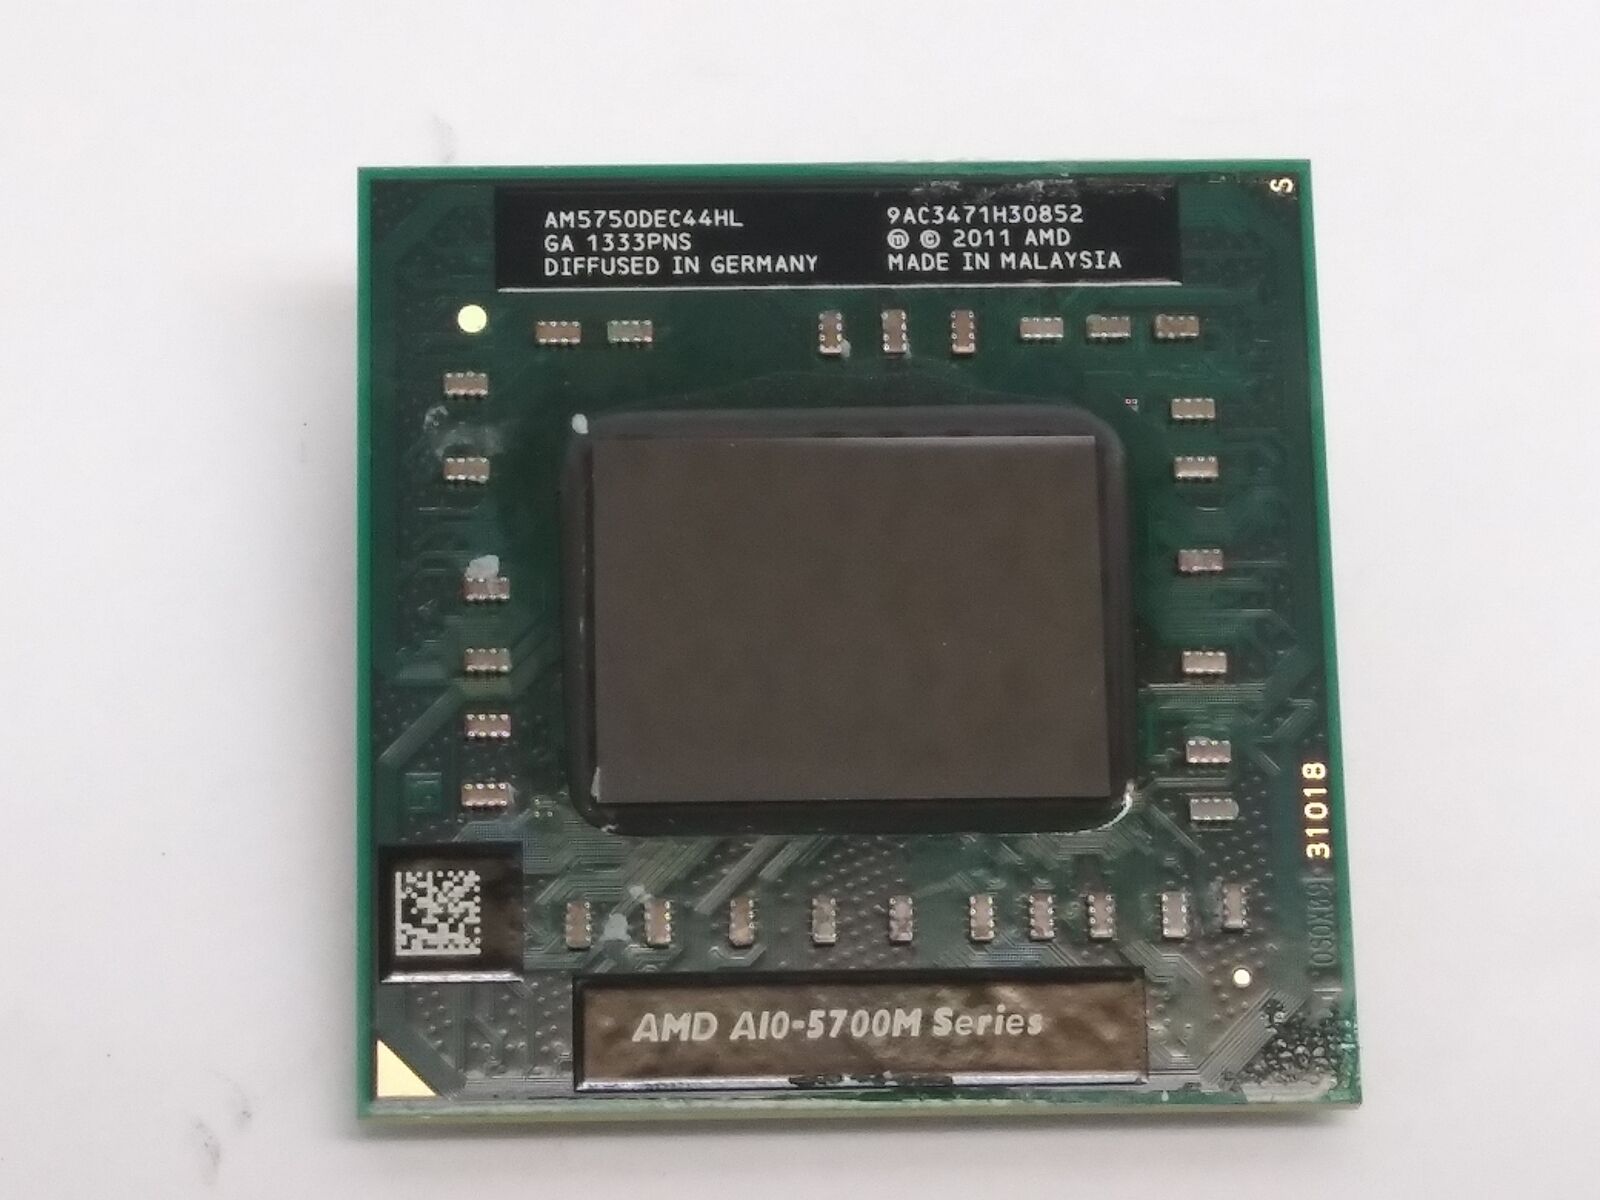 AMD A10-5750M Socket FS1 2.5GHZ Laptop CPU - AM5750DEC44HL